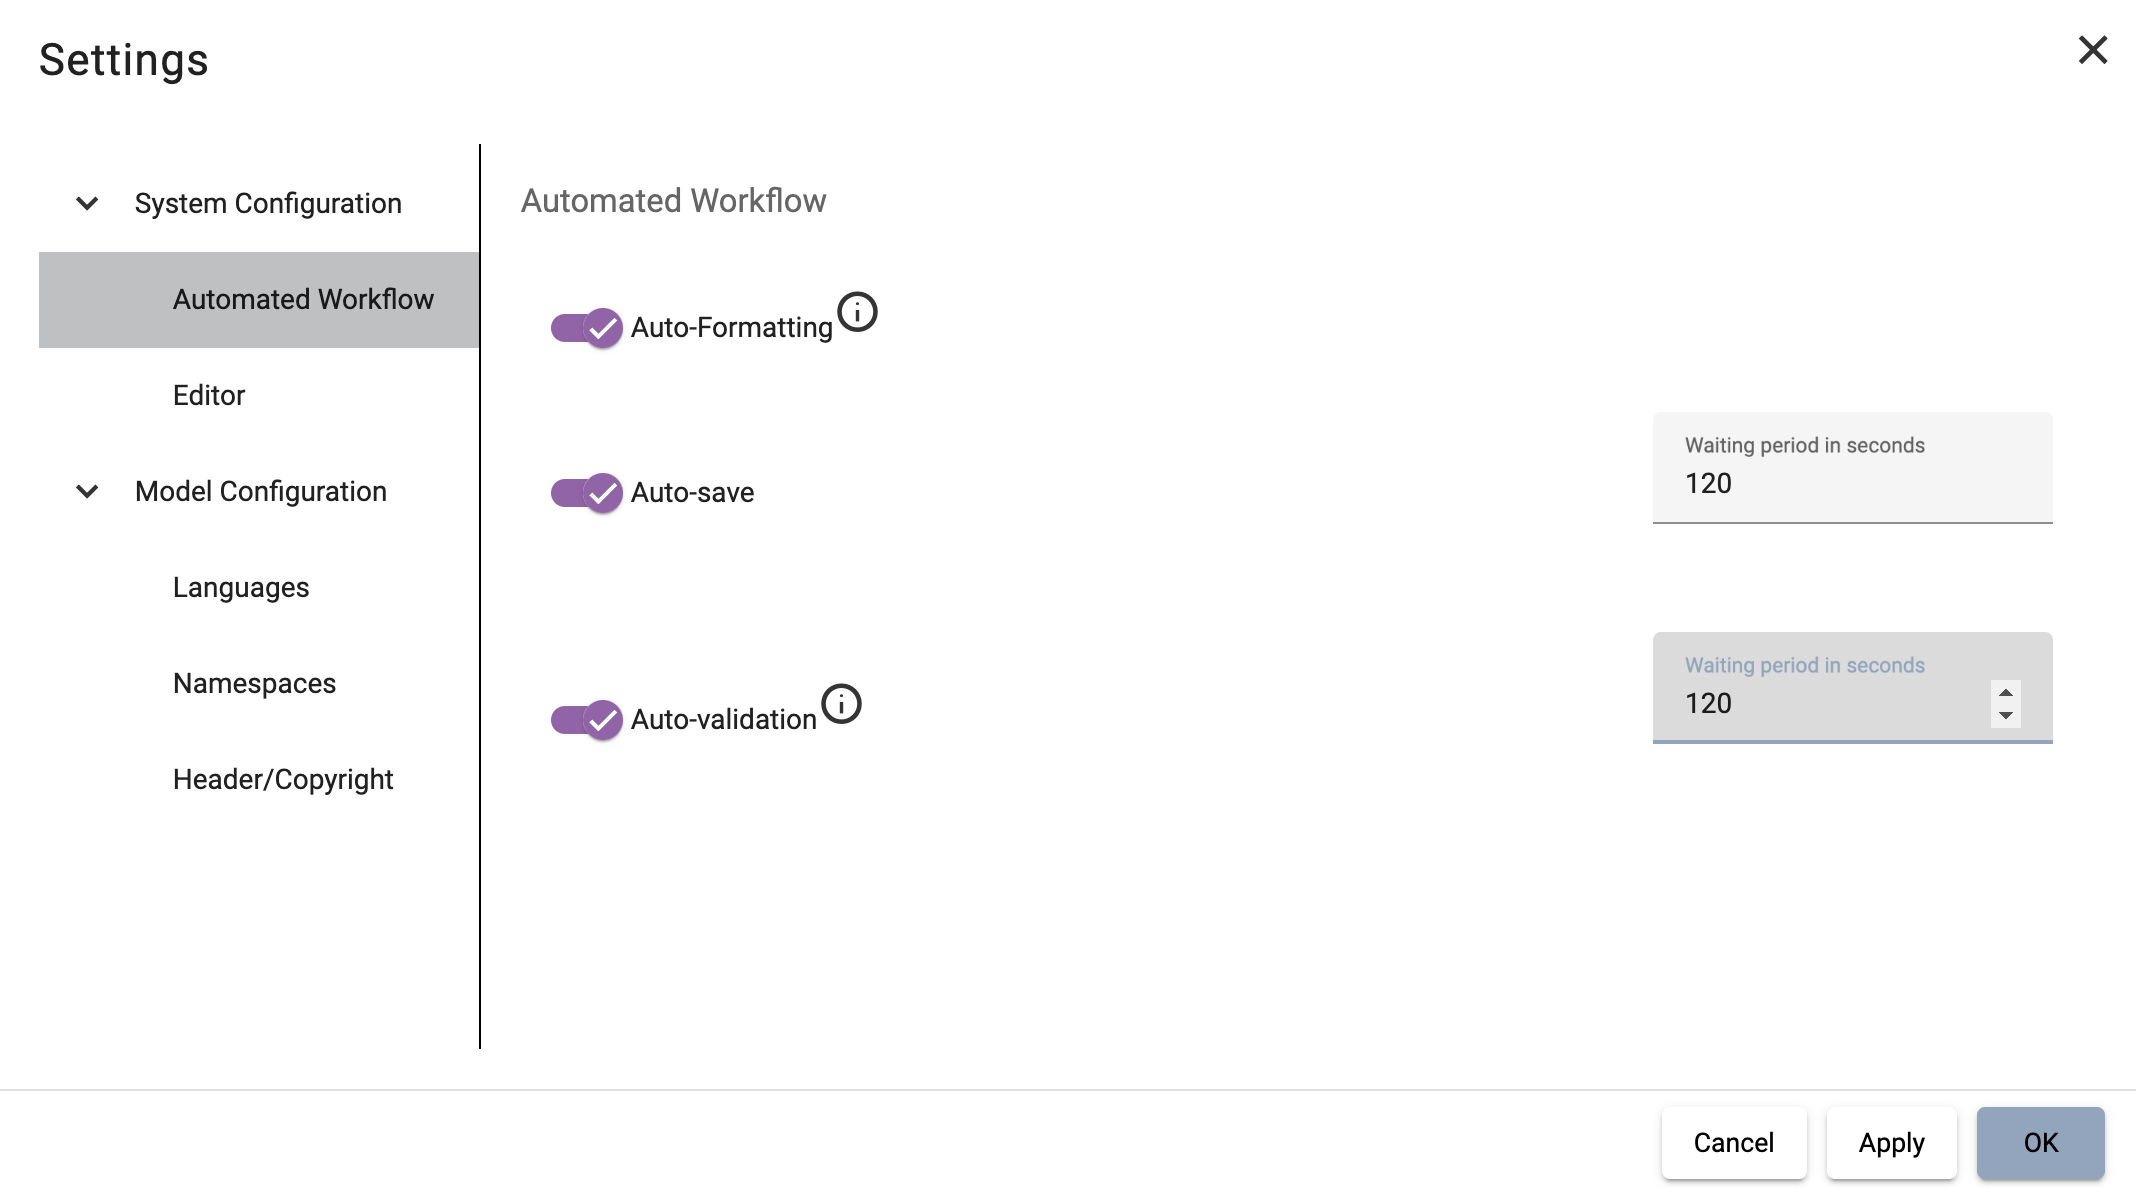 Automated Workflow menu in Settings dialog